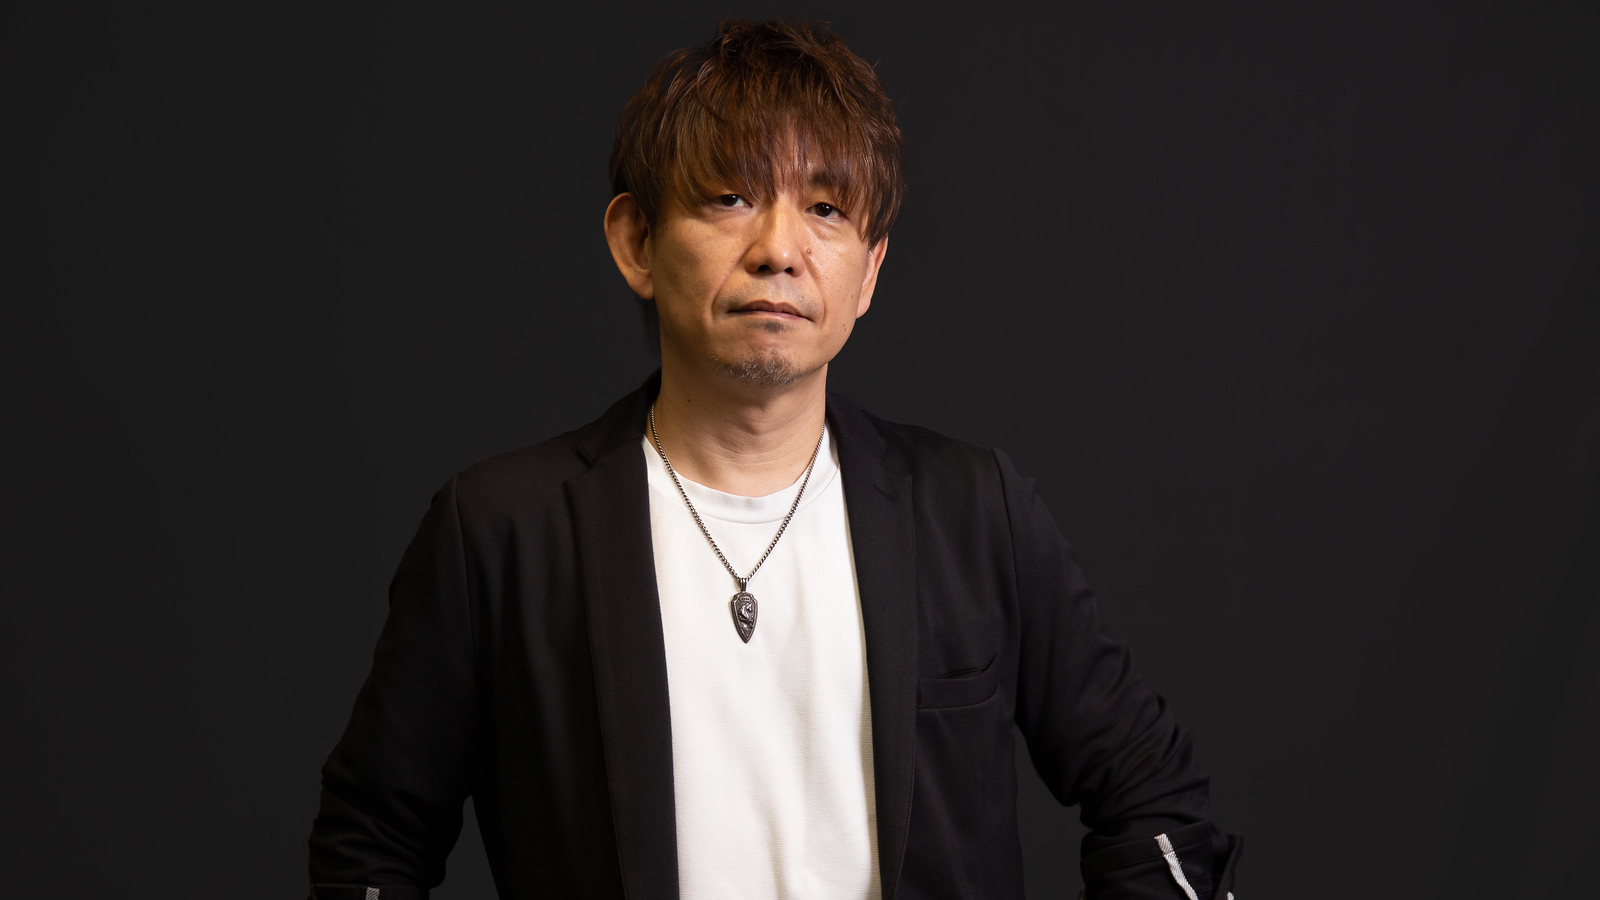 Final Fantasy 14's Naoki Yoshida on creating the ultimate MMORPG